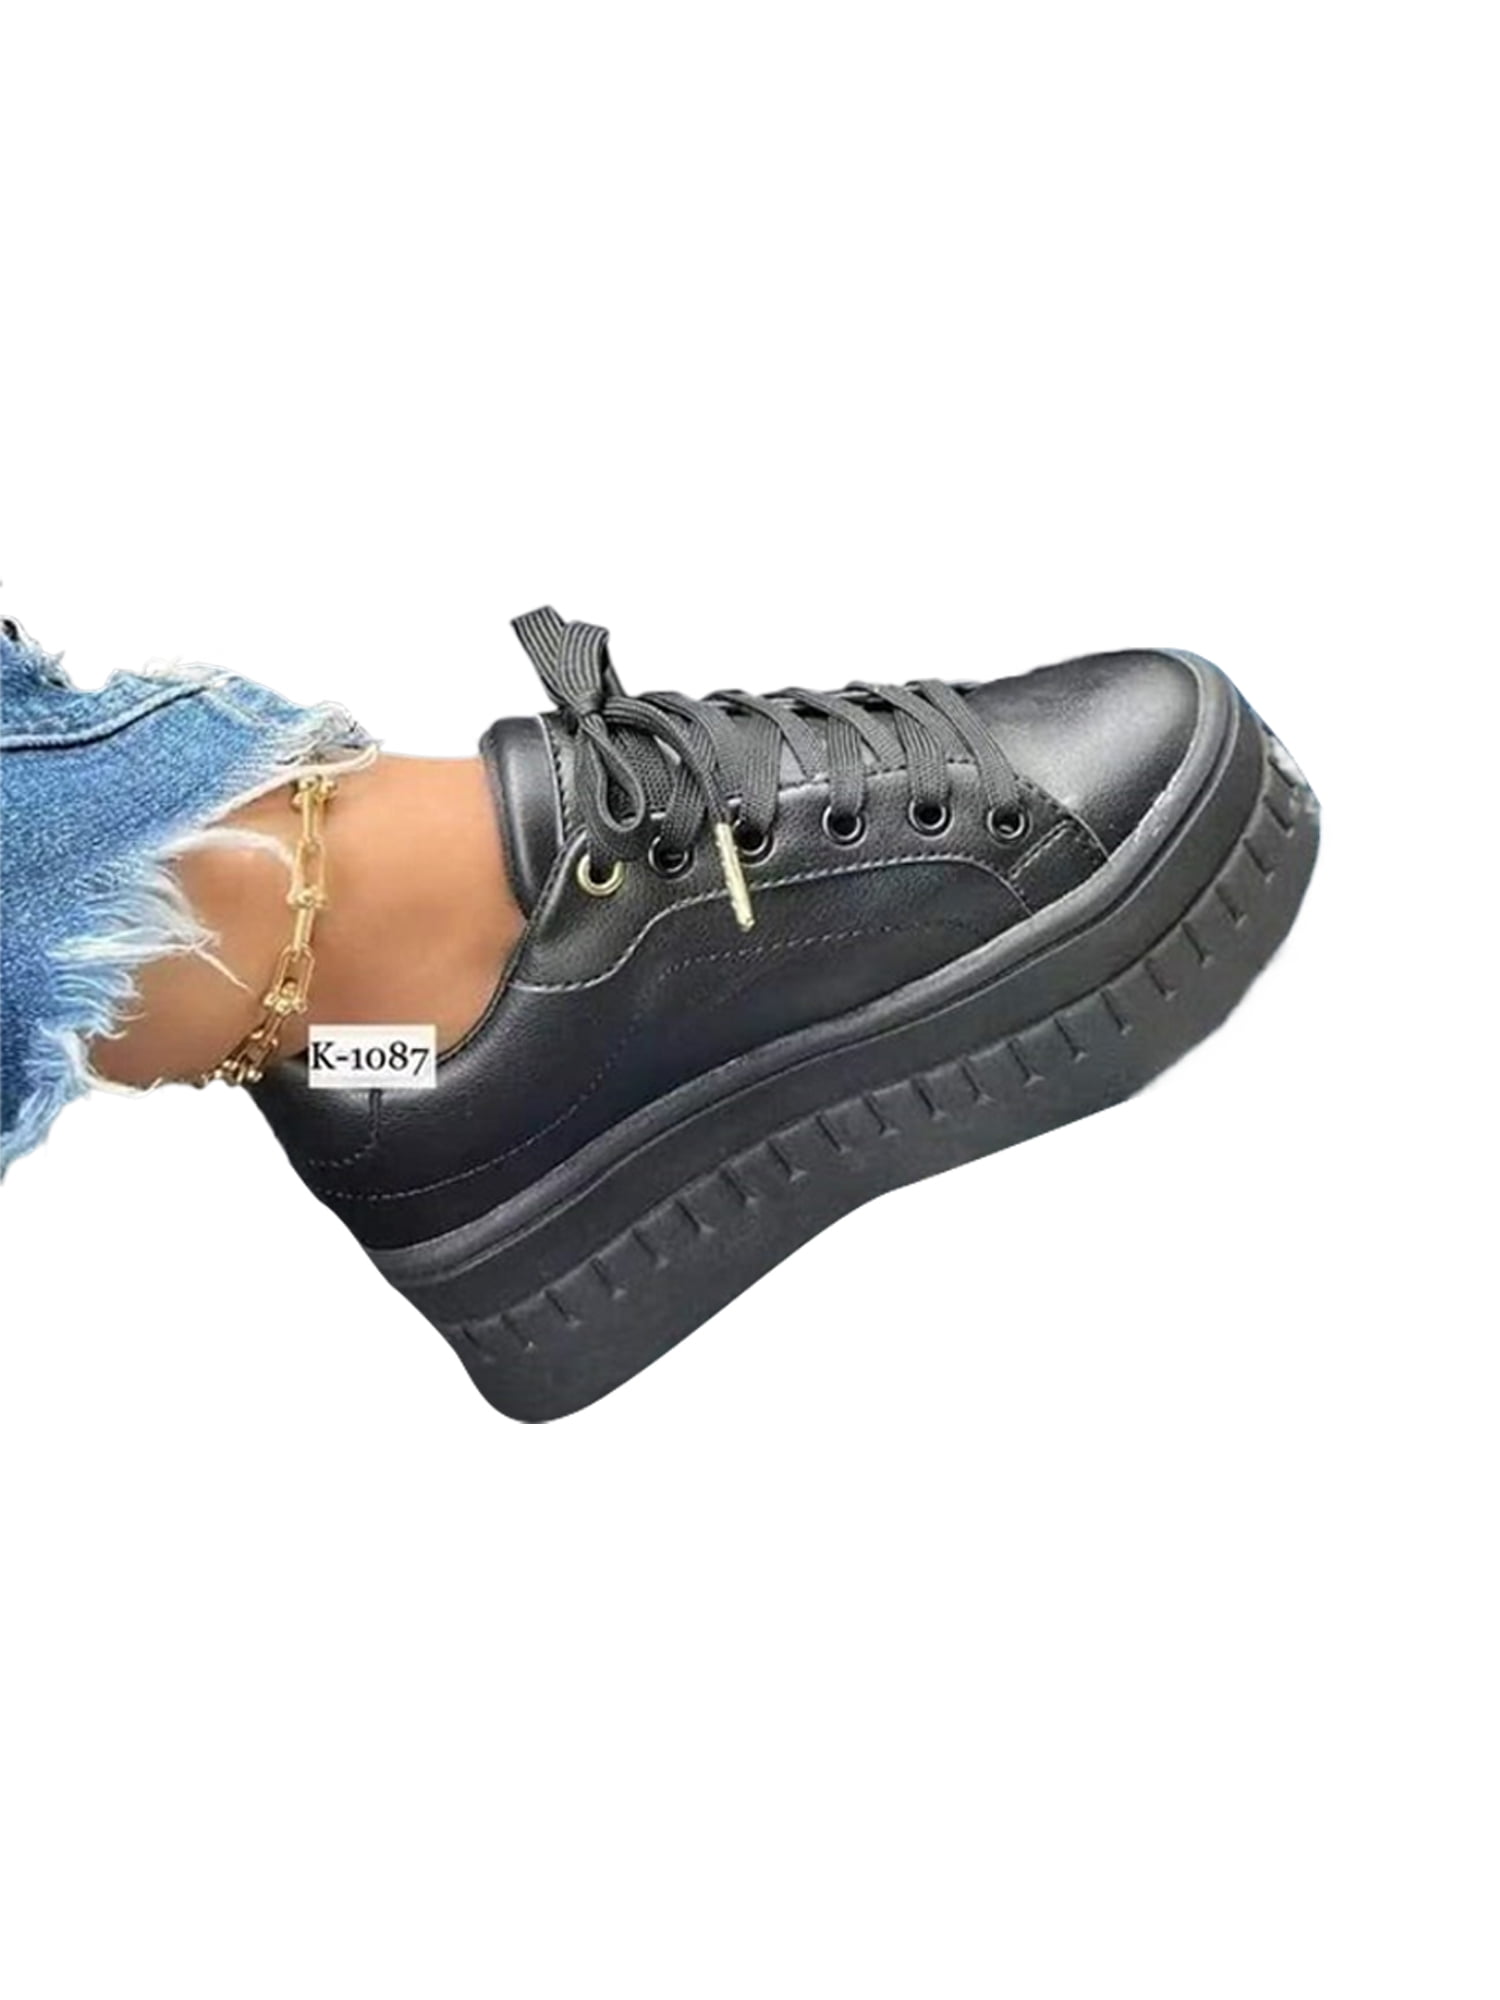 Wazshop Women Fashion Sneakers Round Toe Skate Shoes Low Top